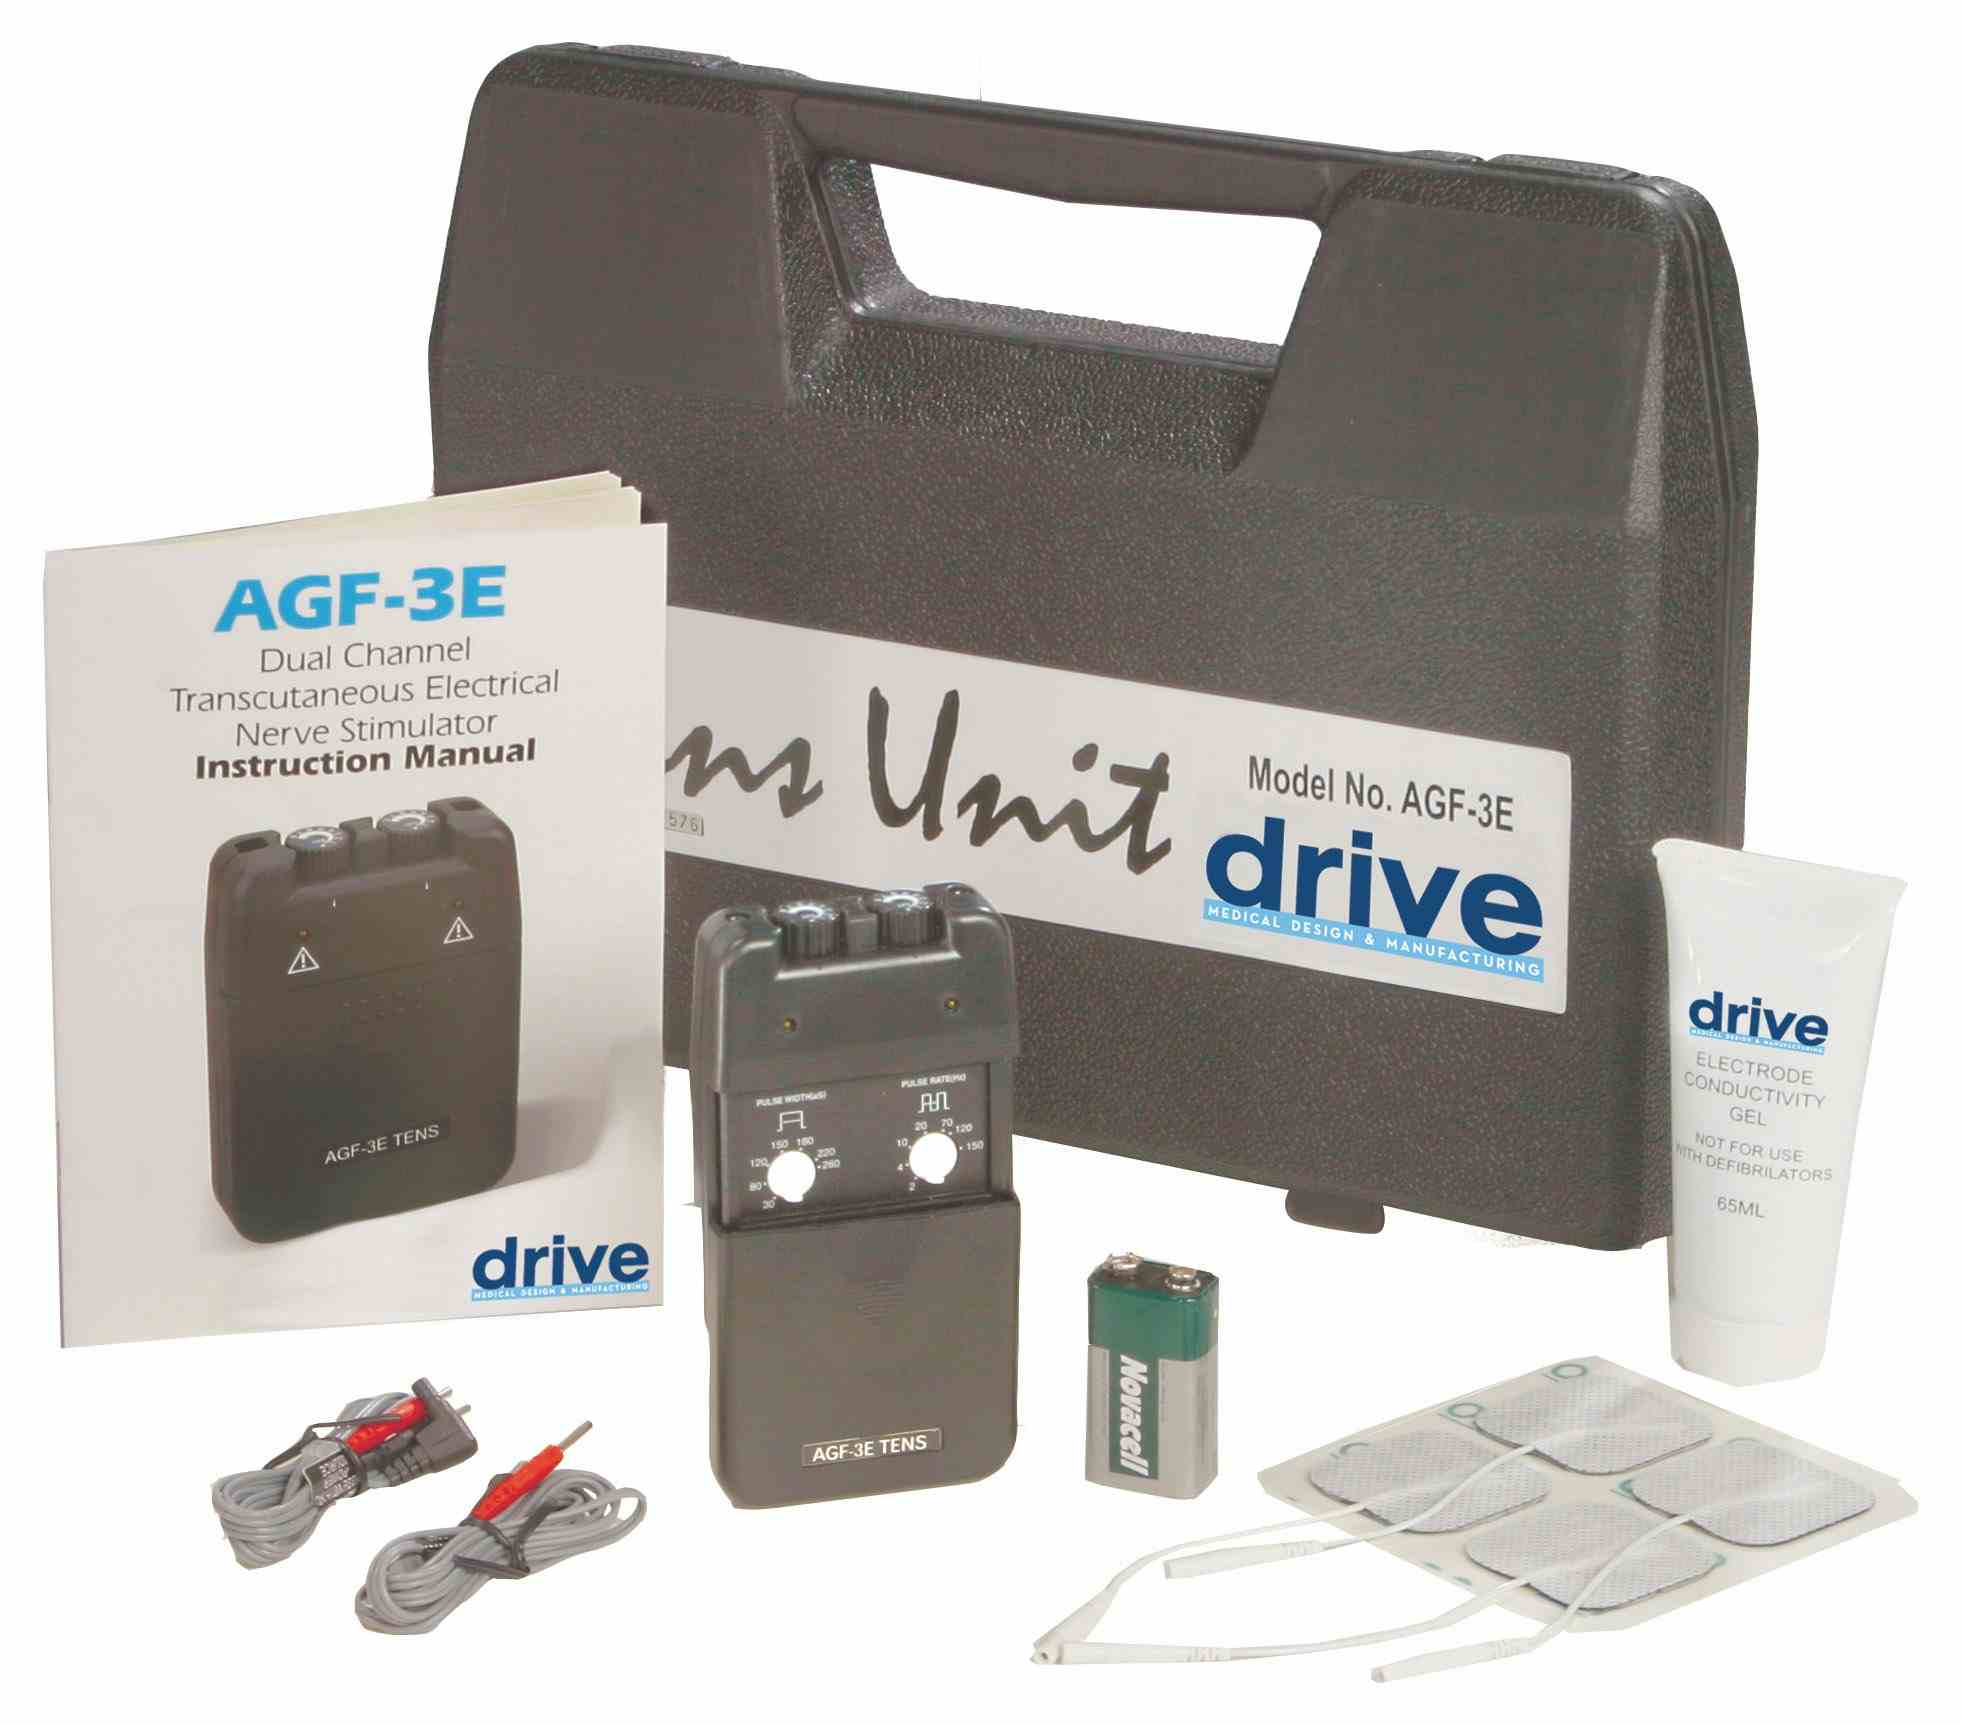 drive Economy Dual Channel TENS, AGF-3E, 1 Kit